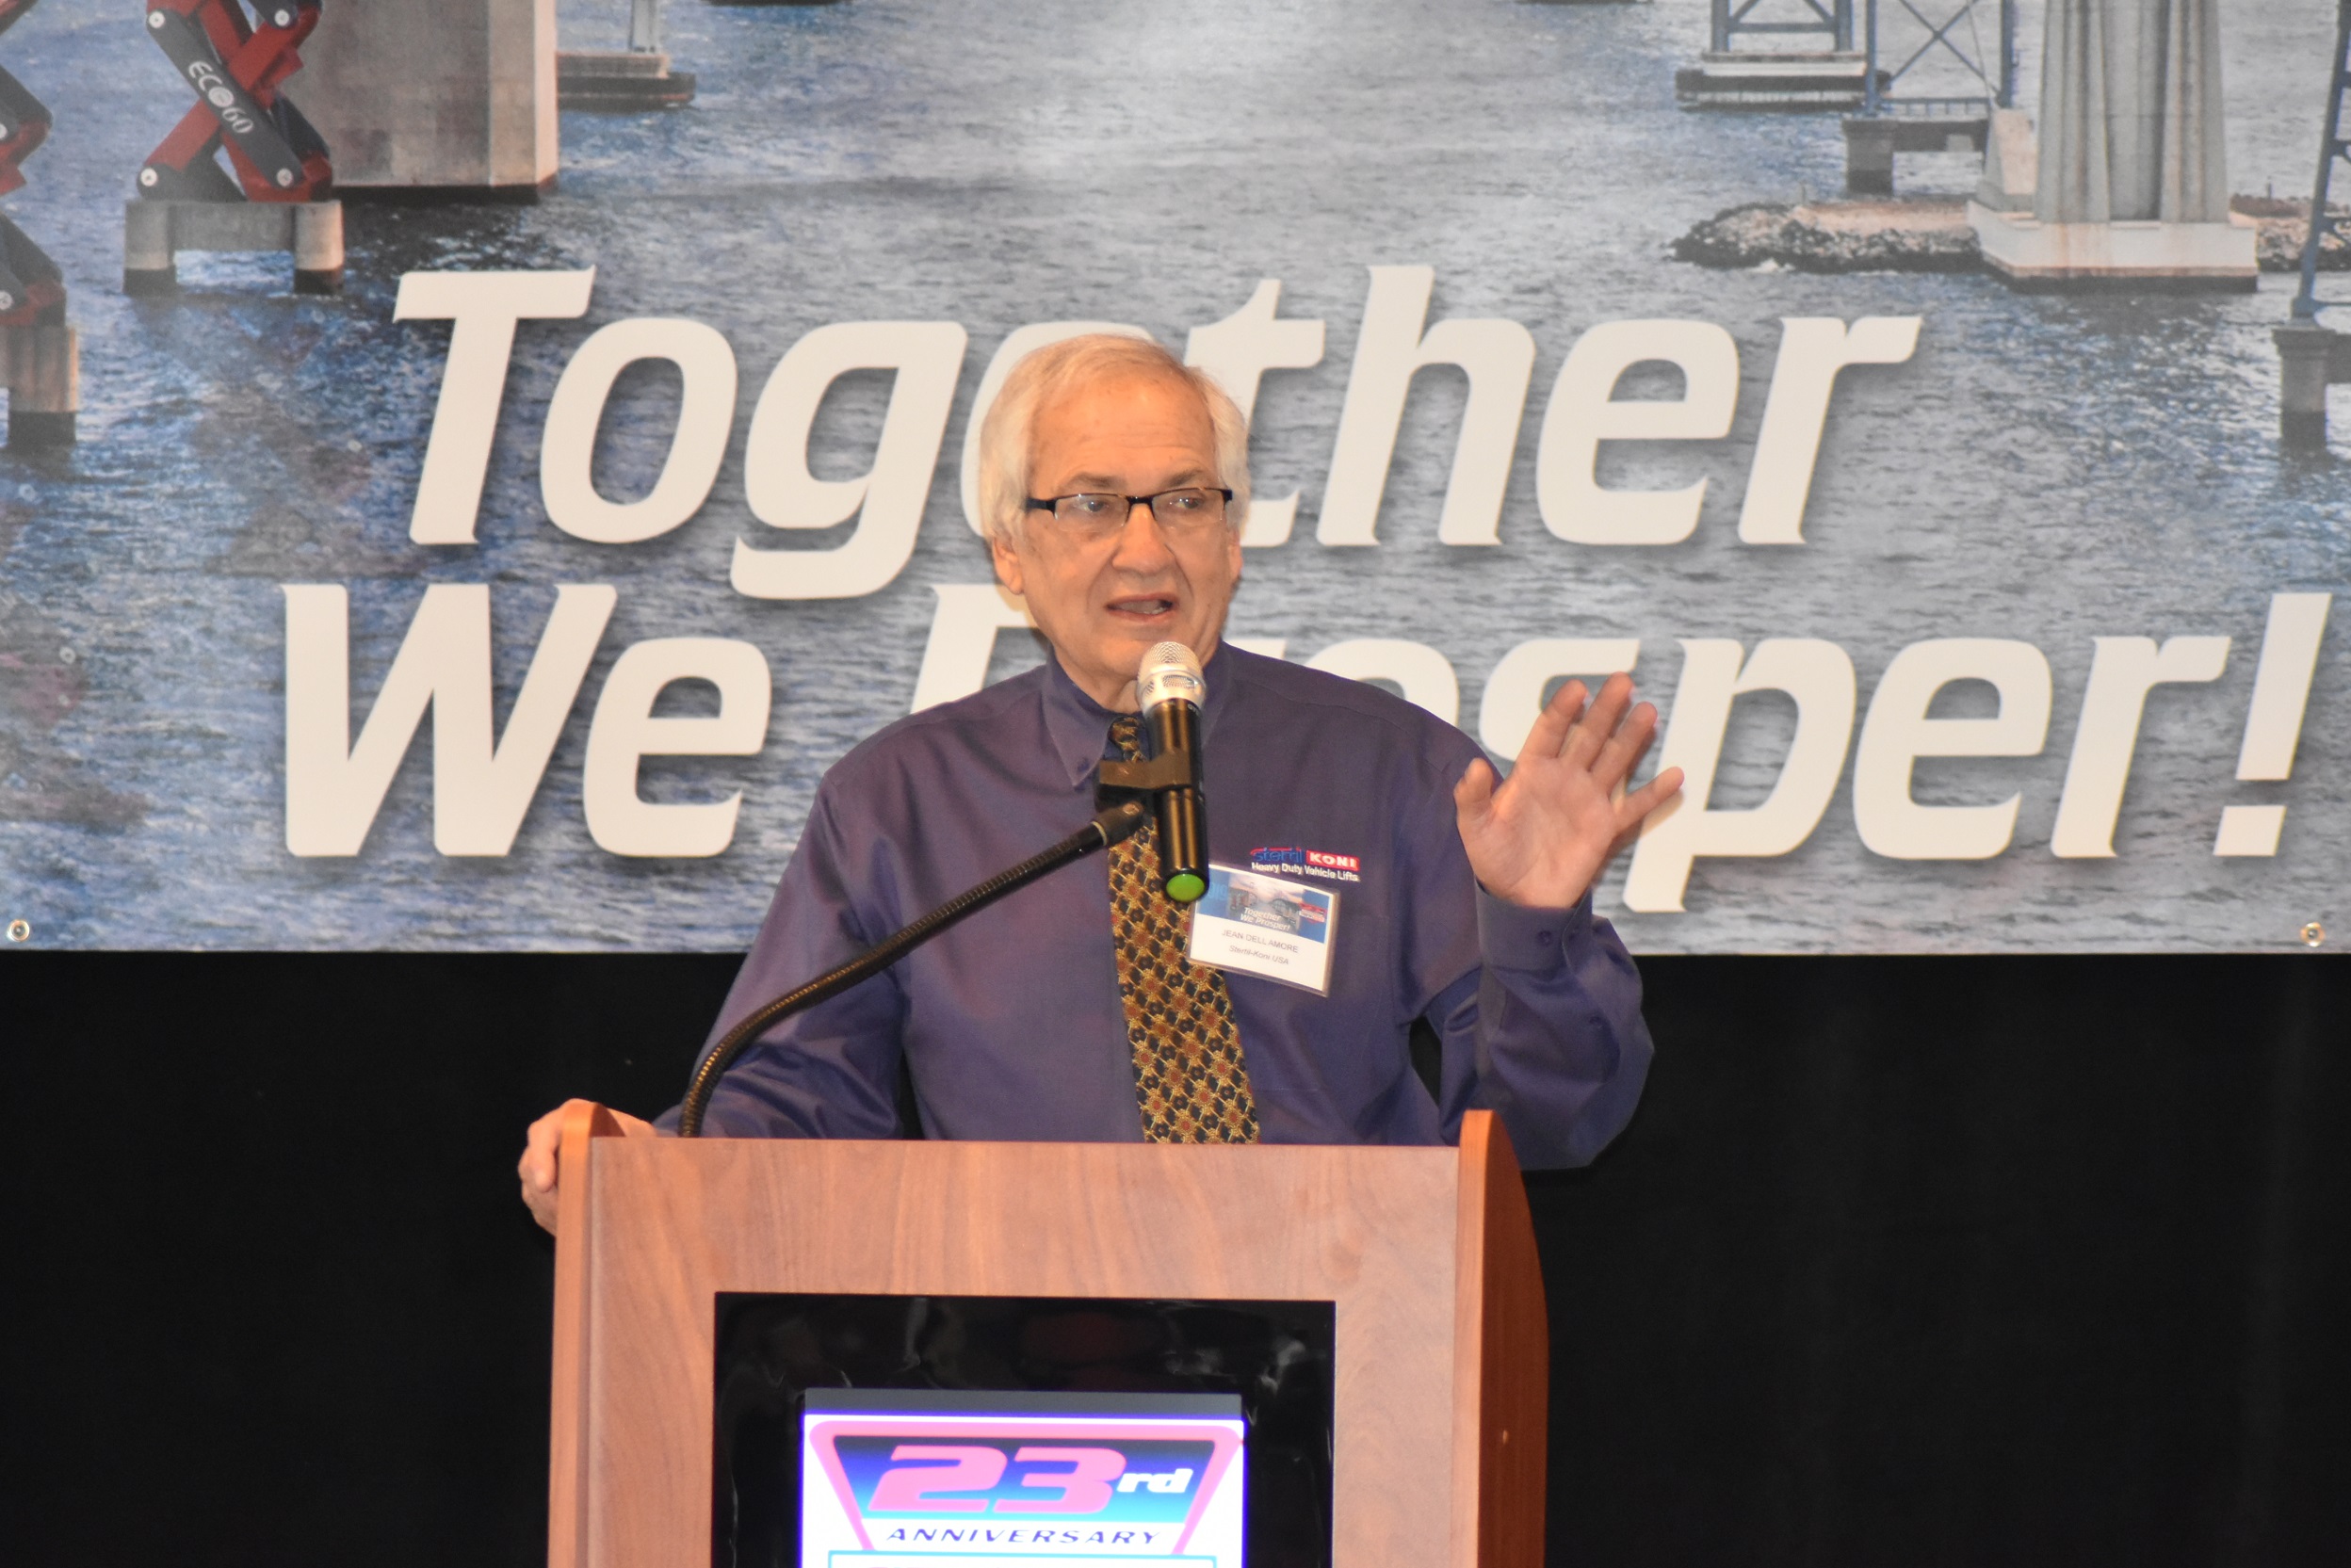 Stertil-Koni USA Inc. President, Dr. Jean DellAmore, underscores the meeting’s theme: “Together We Prosper”